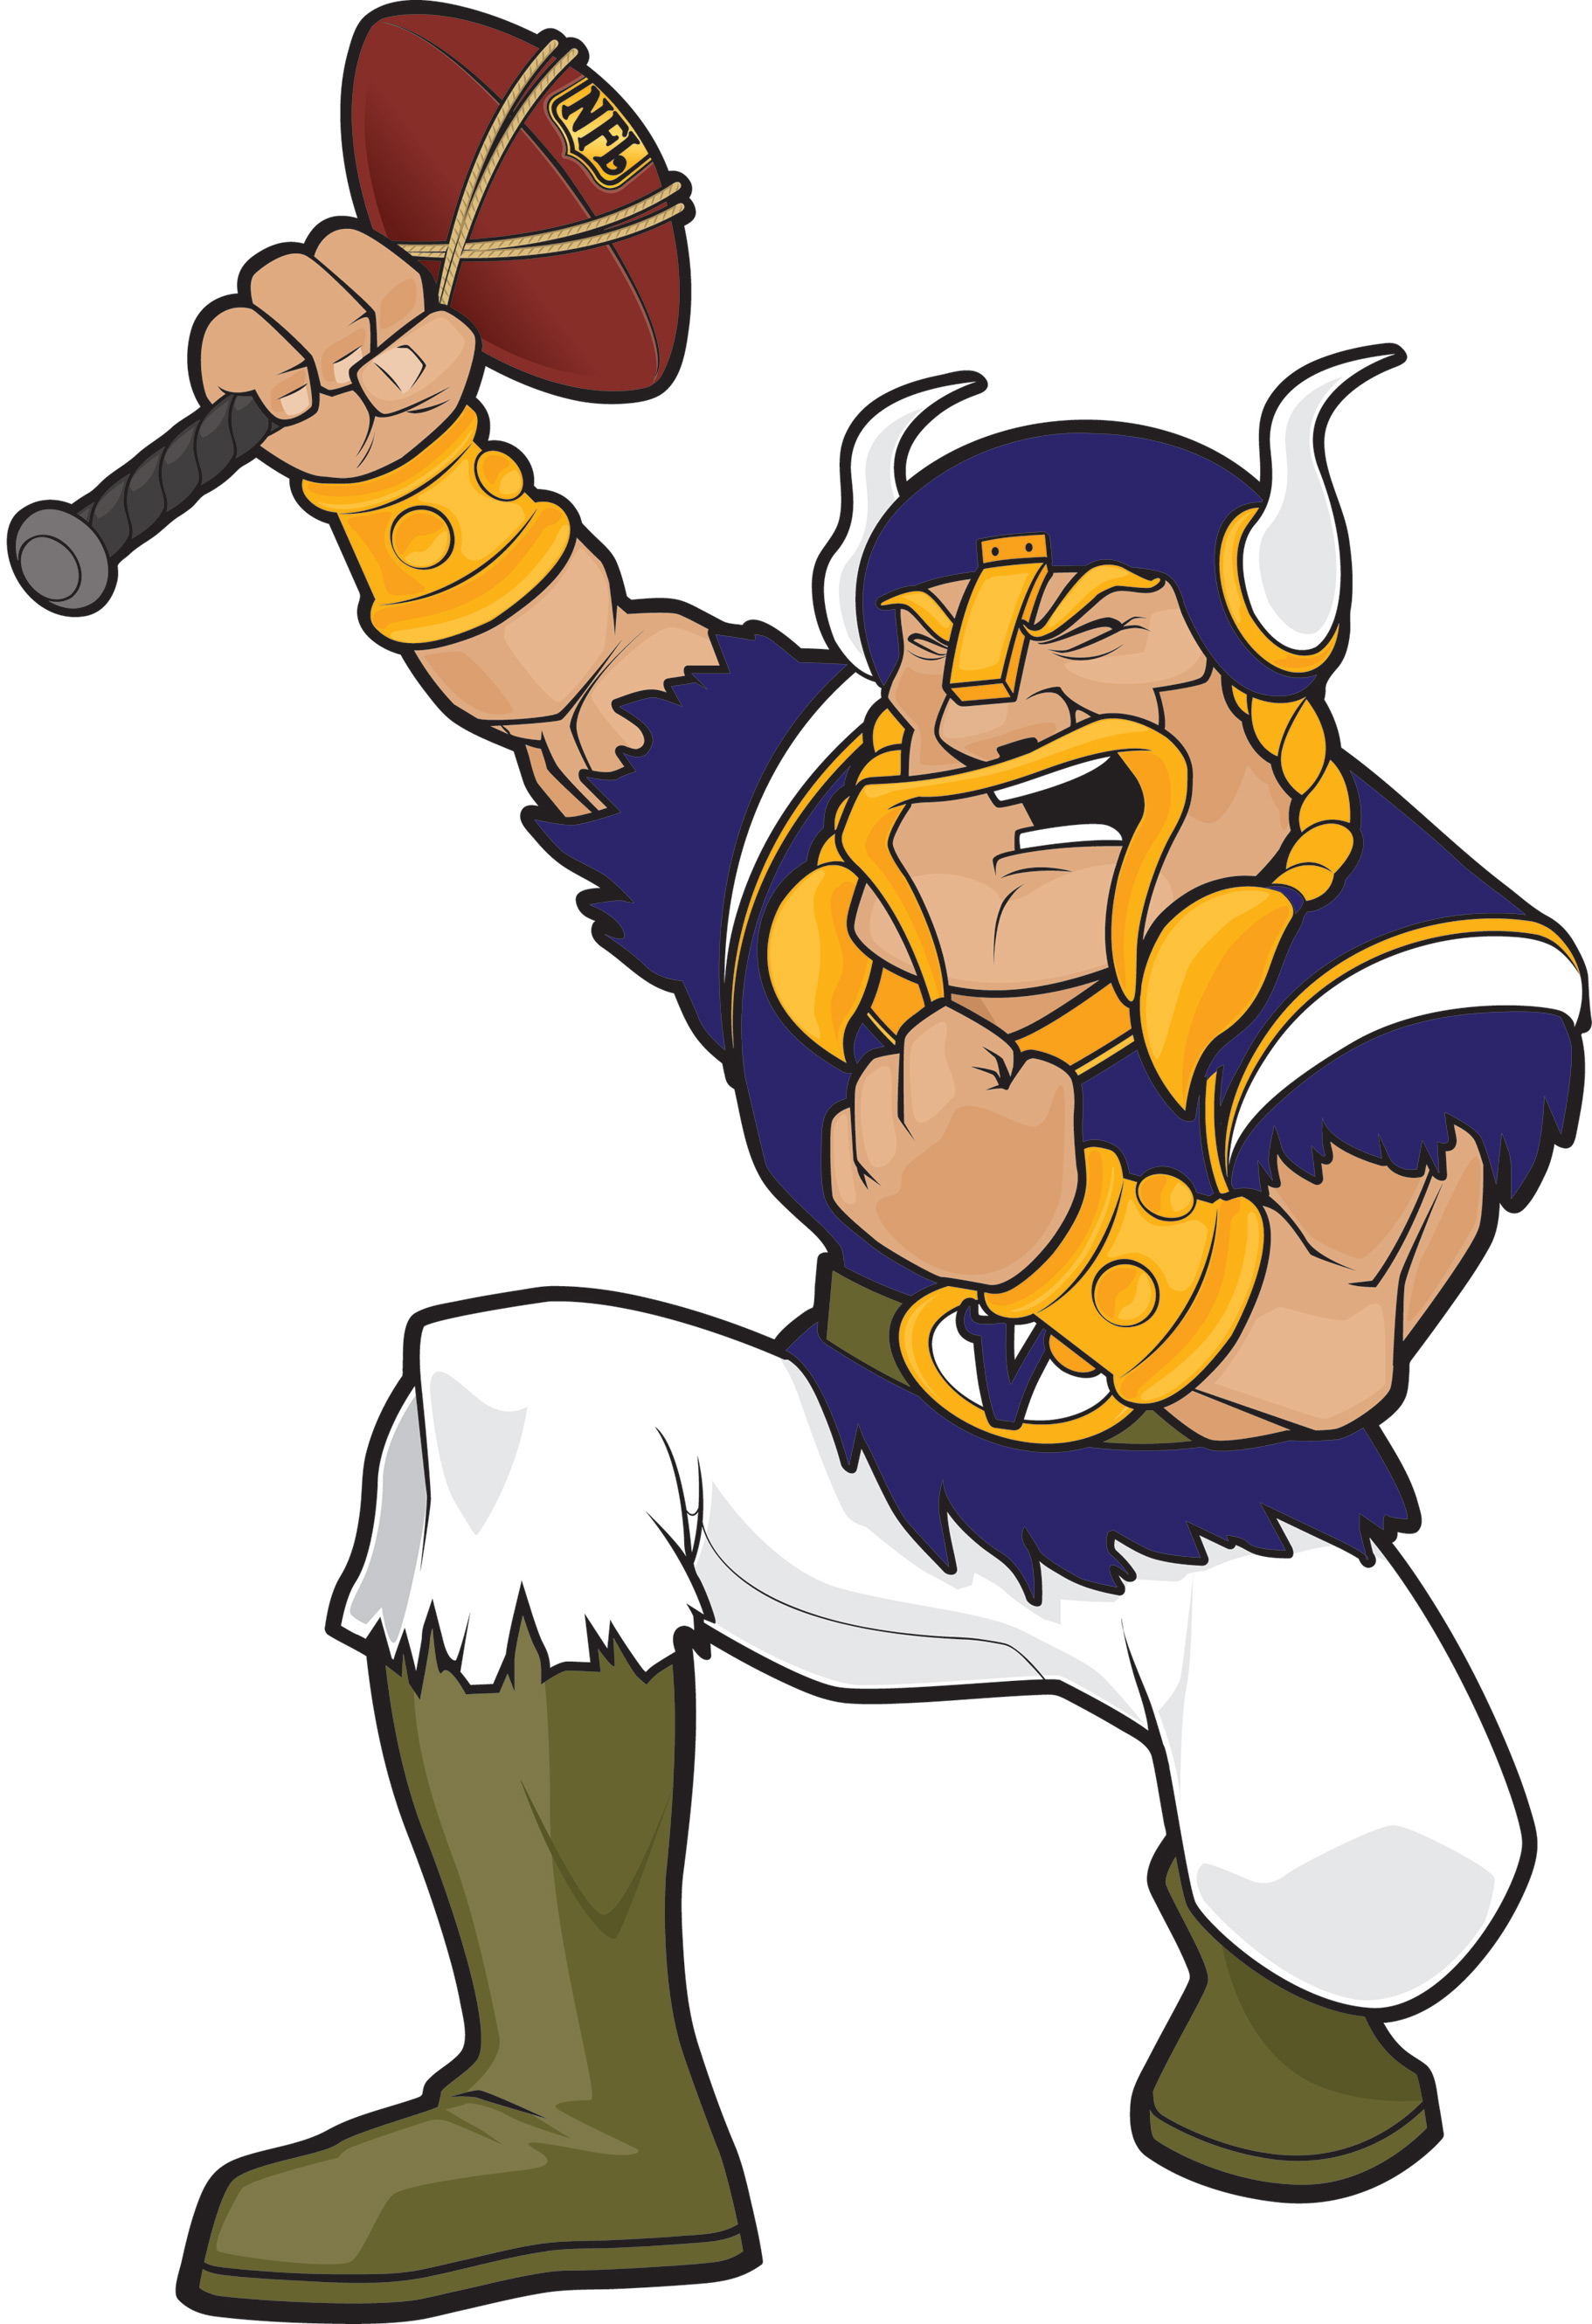 Viktor the Viking Invades NFL: Minnesota Vikings Draft Kids' Marketing